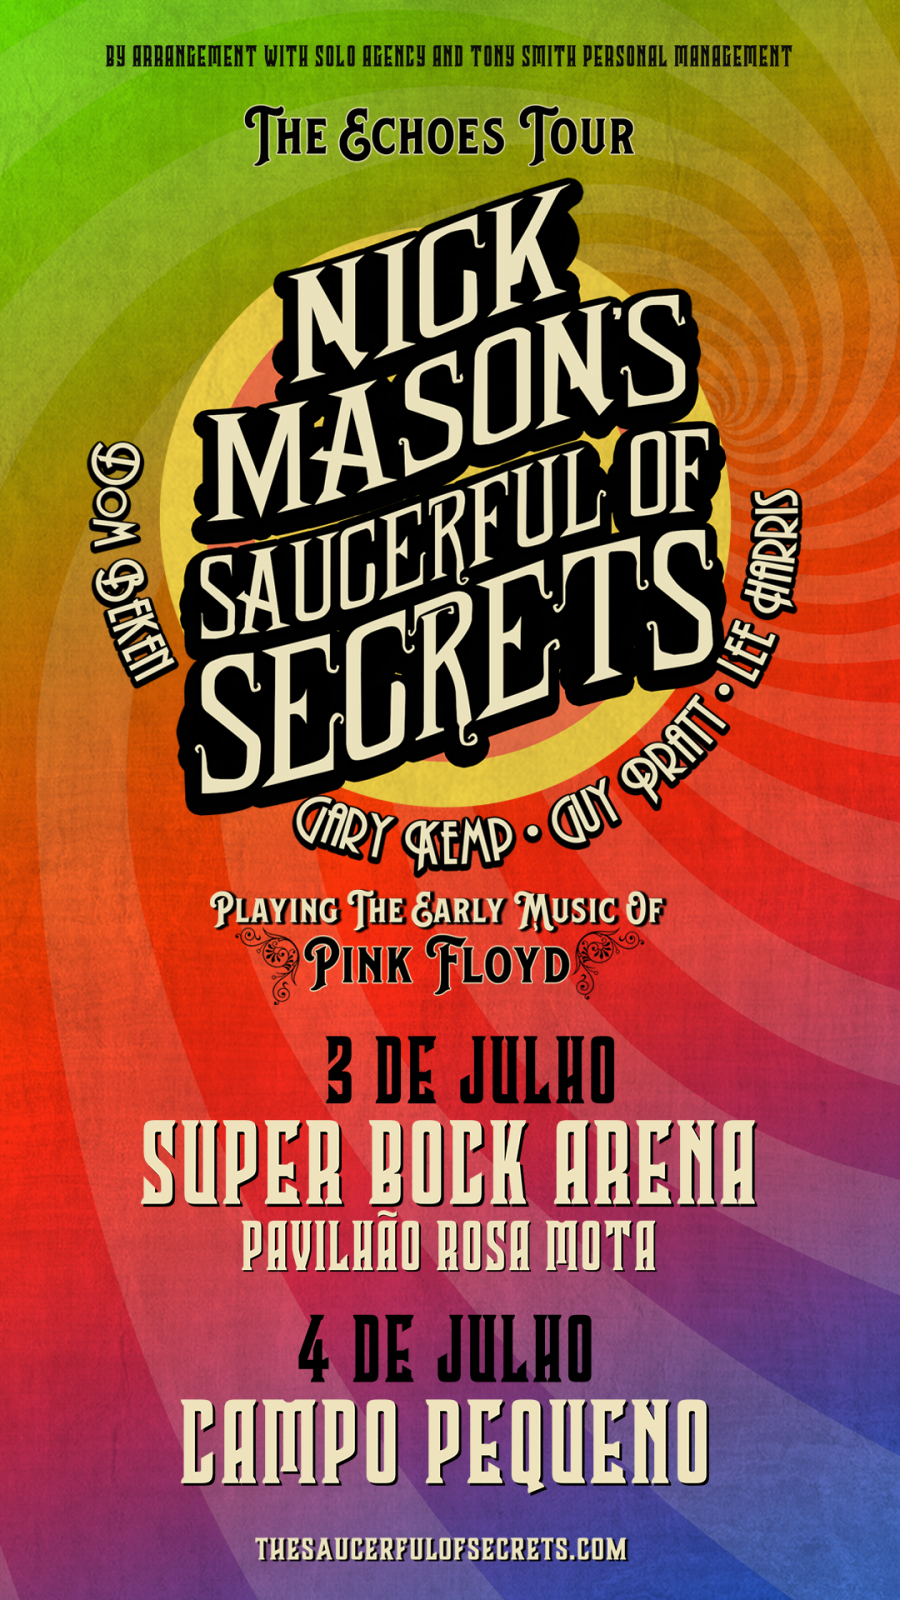 Nick Mason’s Saucerful of Secrets - 12 Julho, 21:30